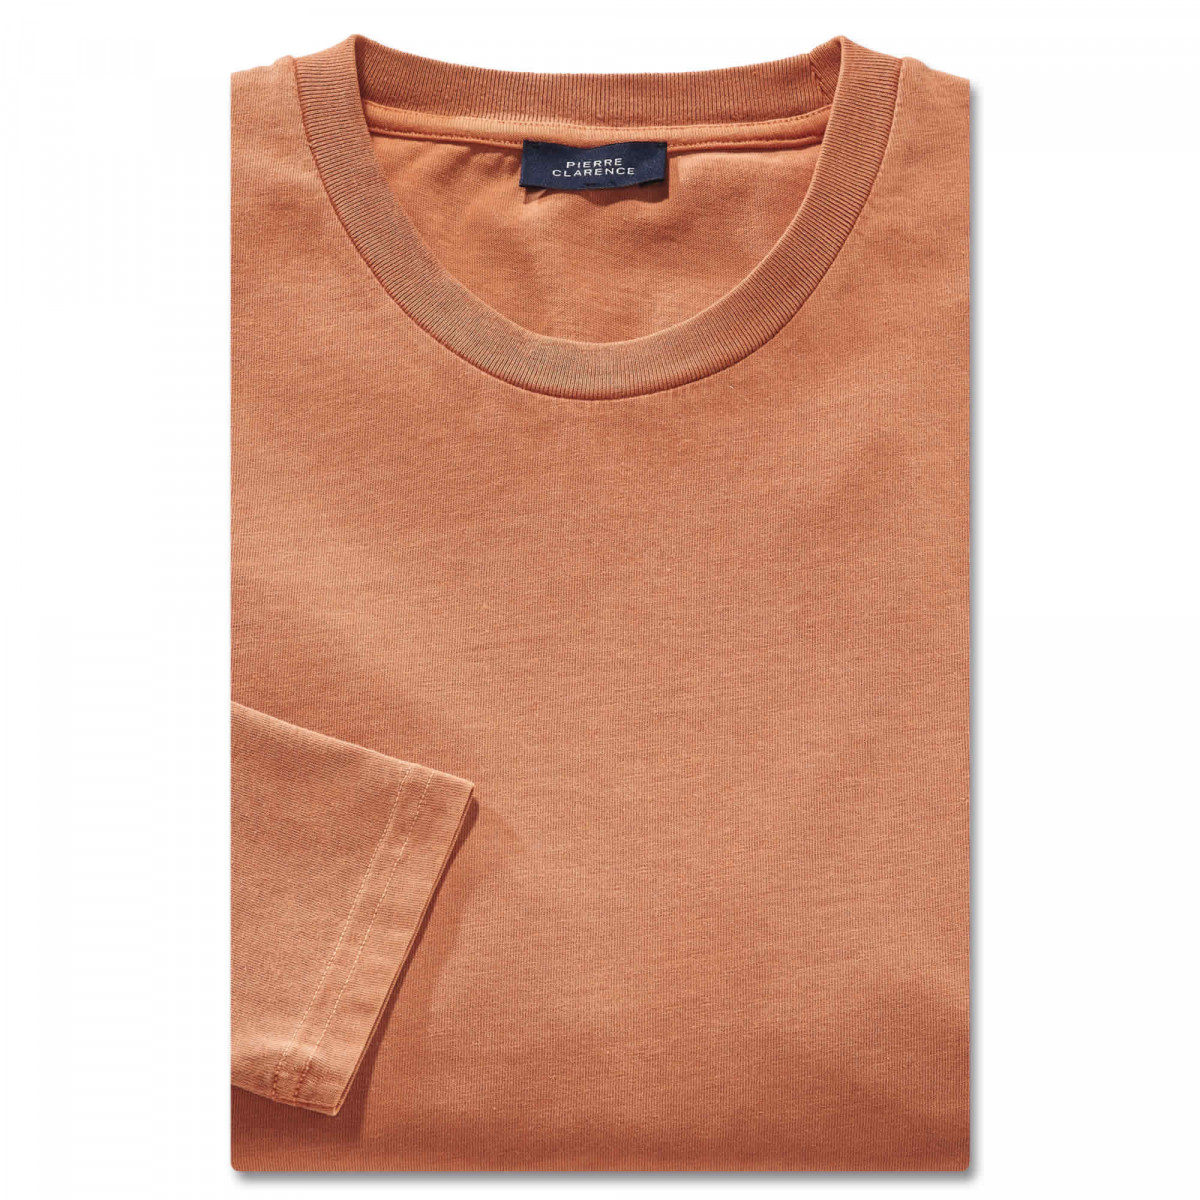 Tee-shirt coton 104/108 (L) Orange